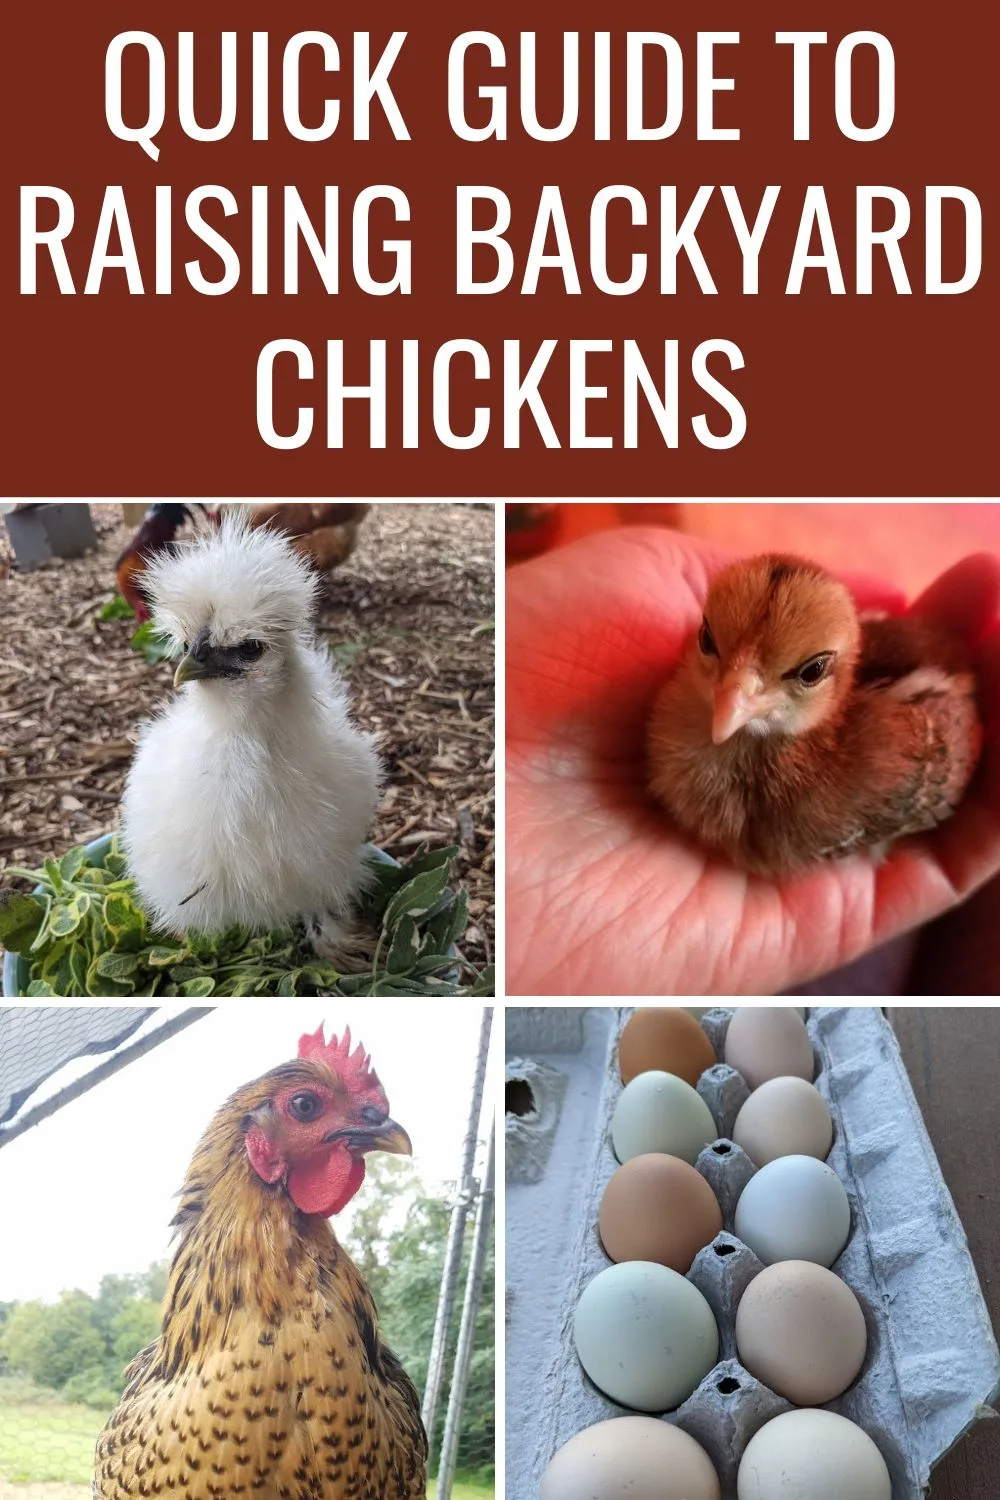 Quick guide to raising backyard chickens